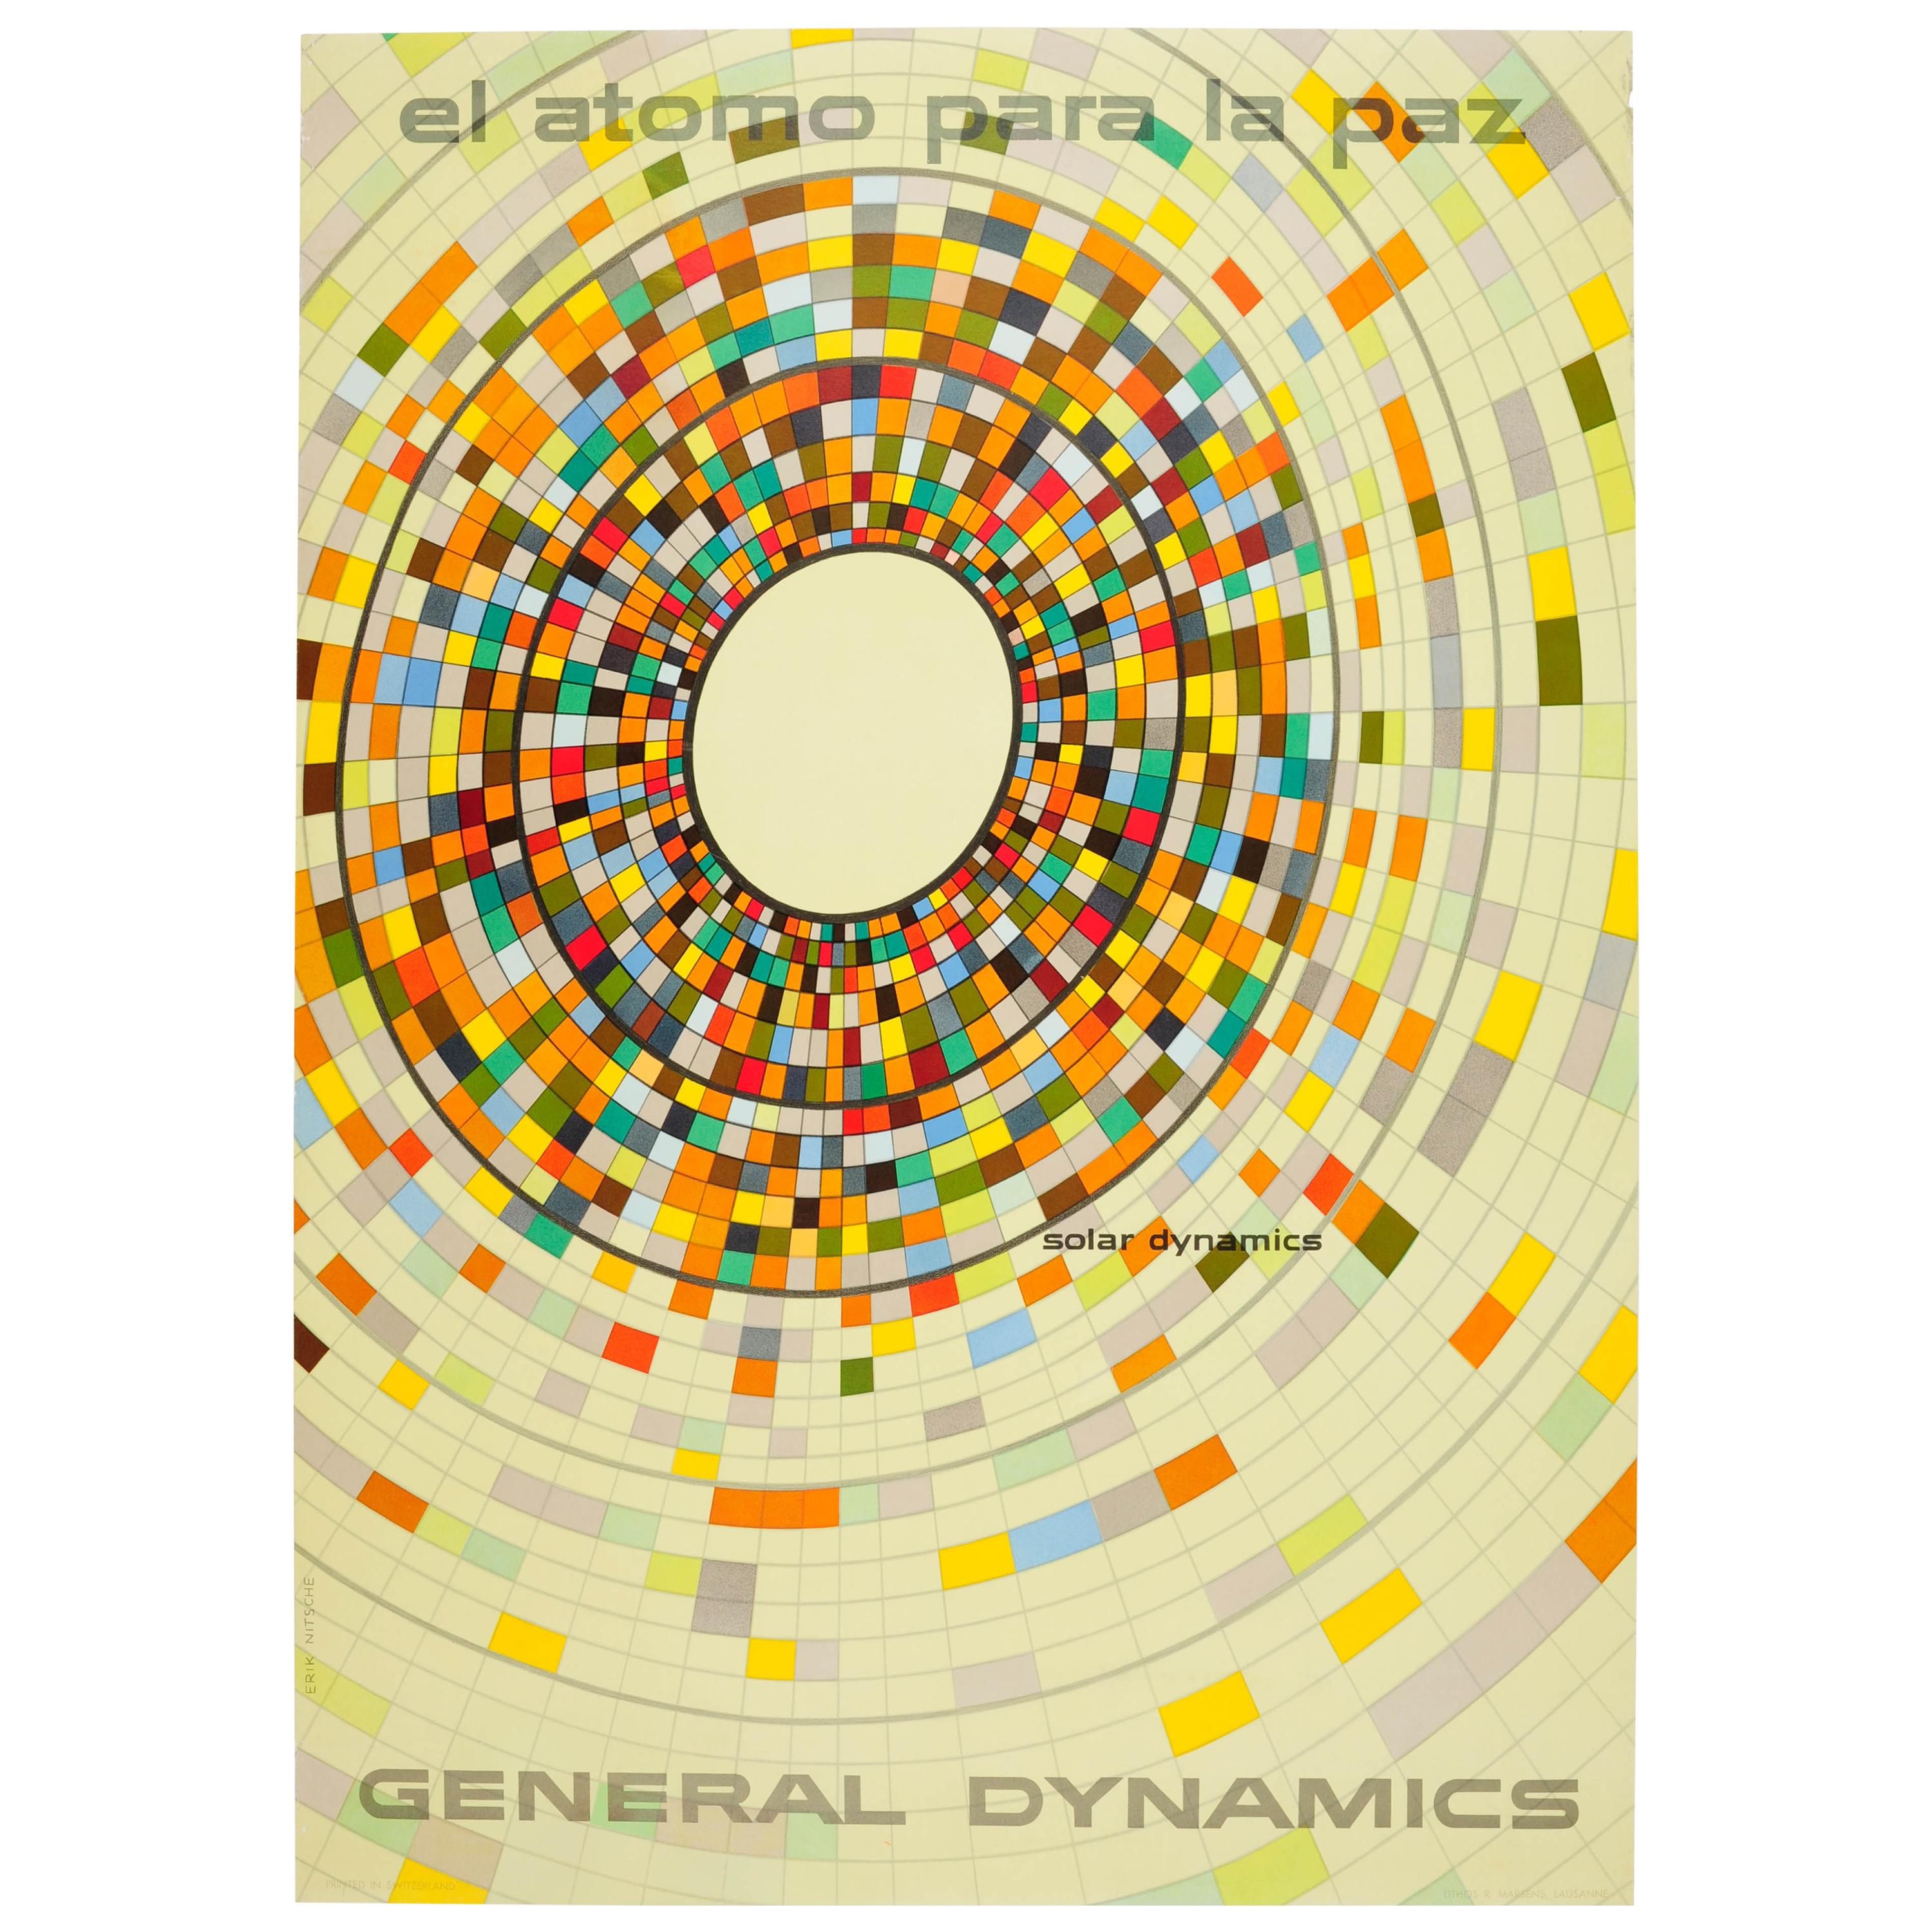 Original Vintage General Dynamics Poster Solar Dynamics Atoms for Peace Nitsche